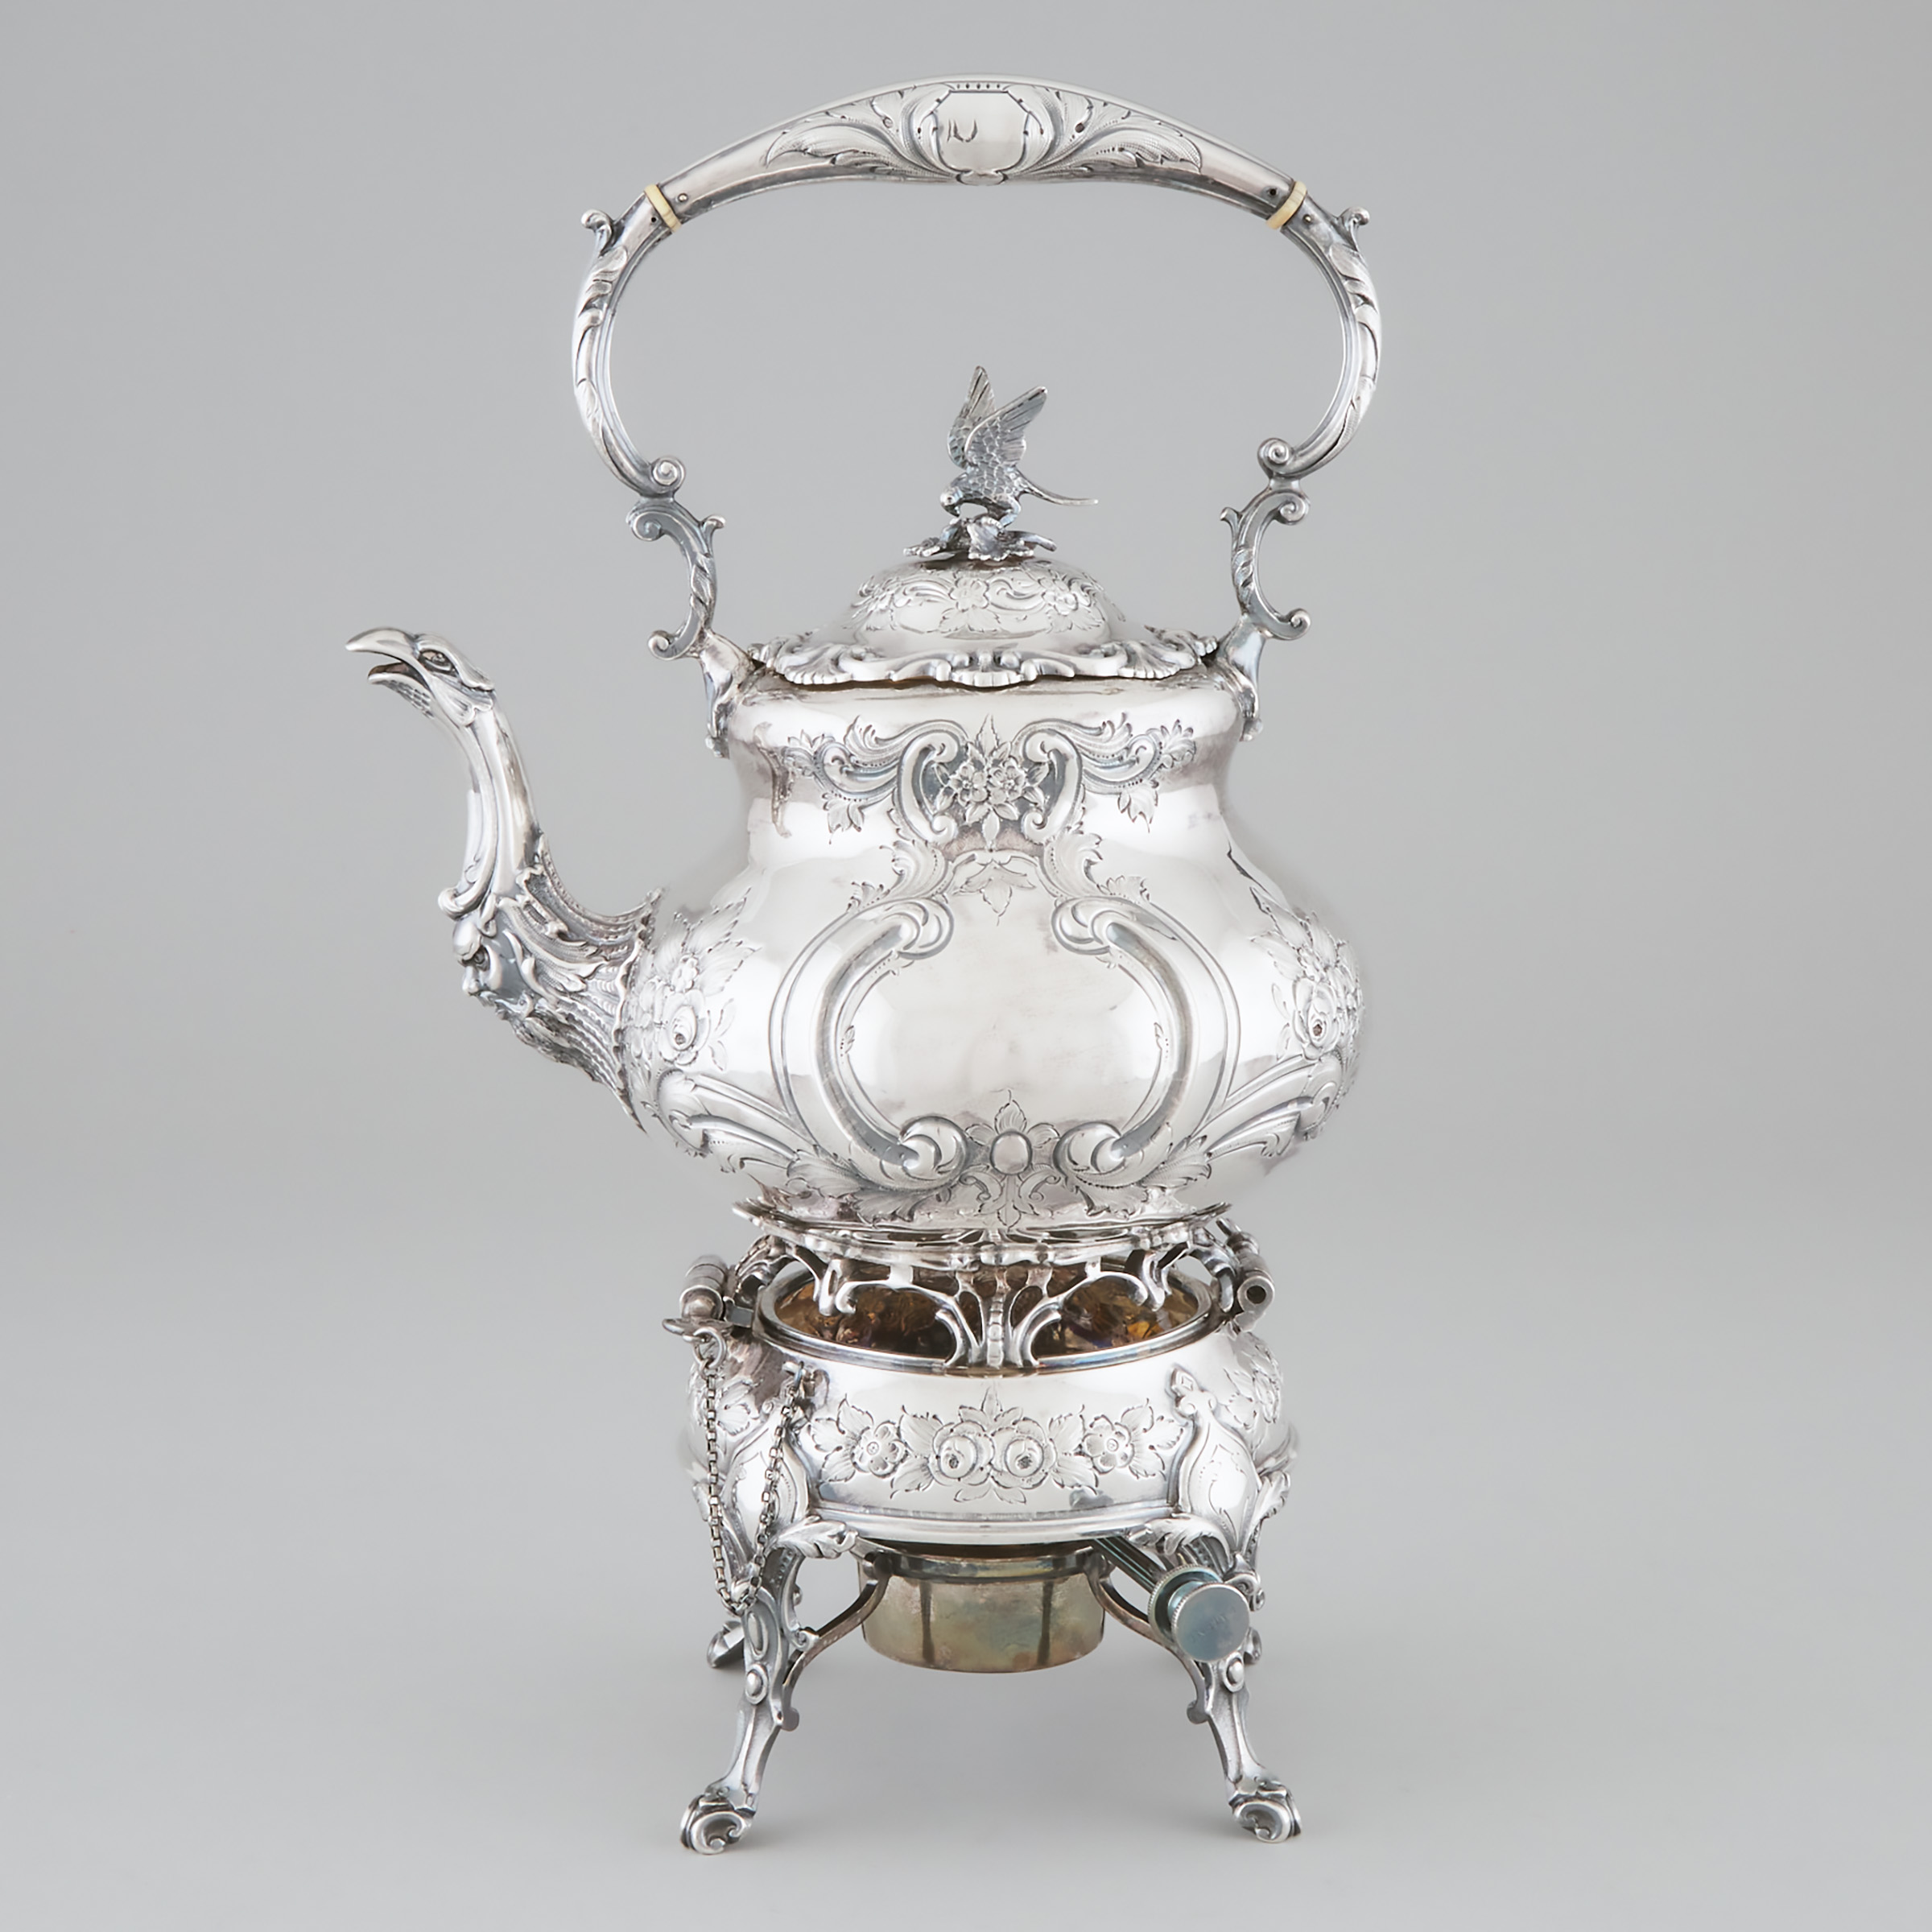 English Silver Tea Kettle on Lampstand, Goldsmiths & Silversmiths Co., London, 1912